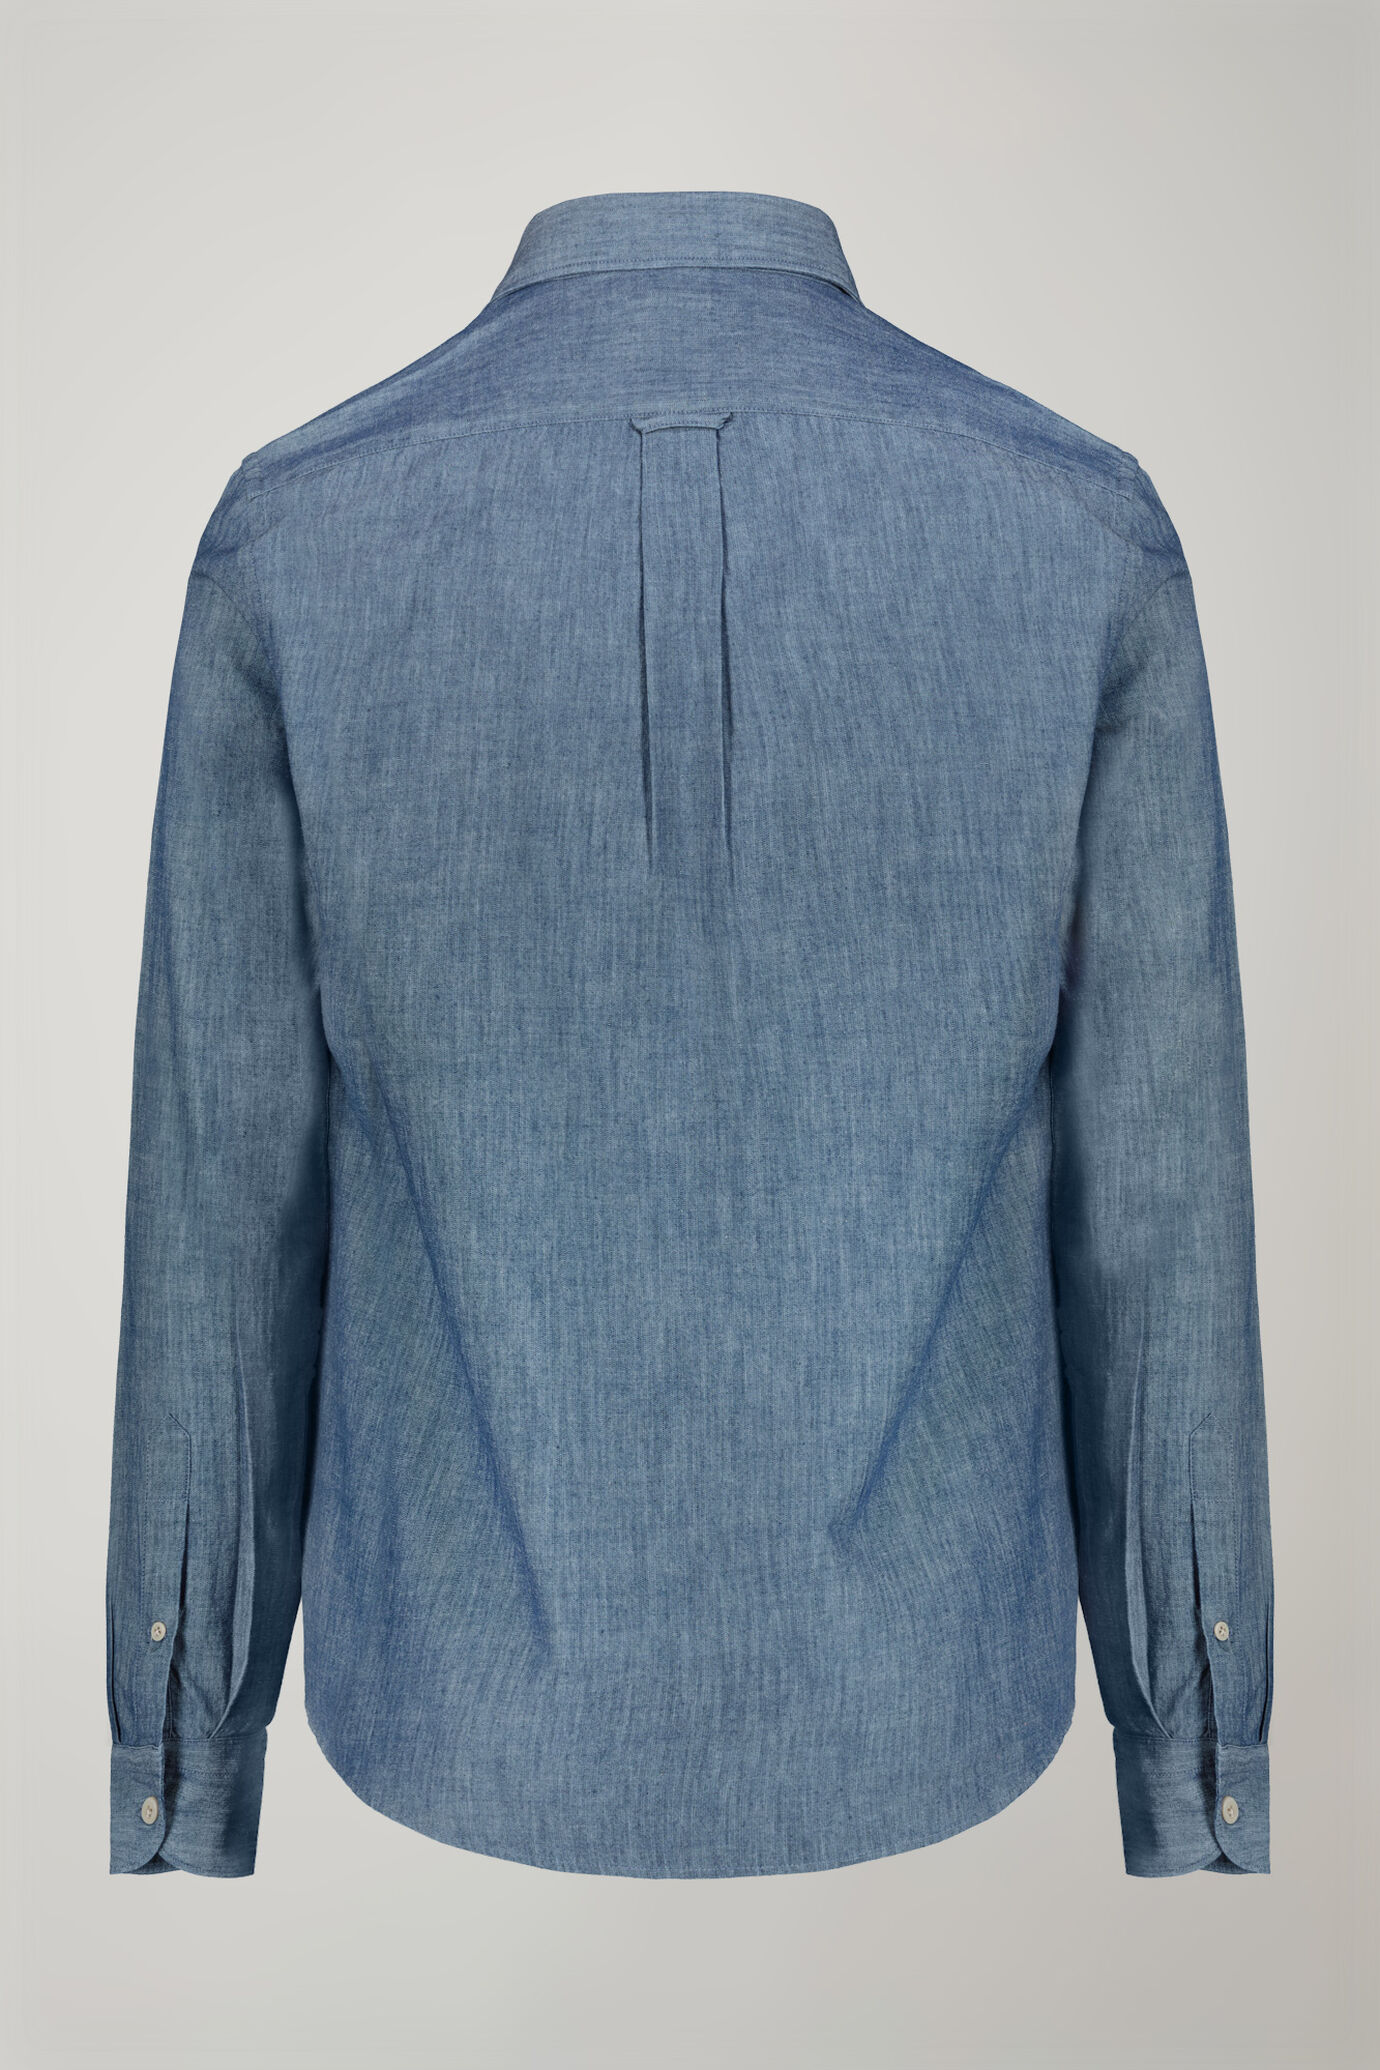 Camicia casual uomo collo classico 100% cotone tessuto denim comfort fit image number 6